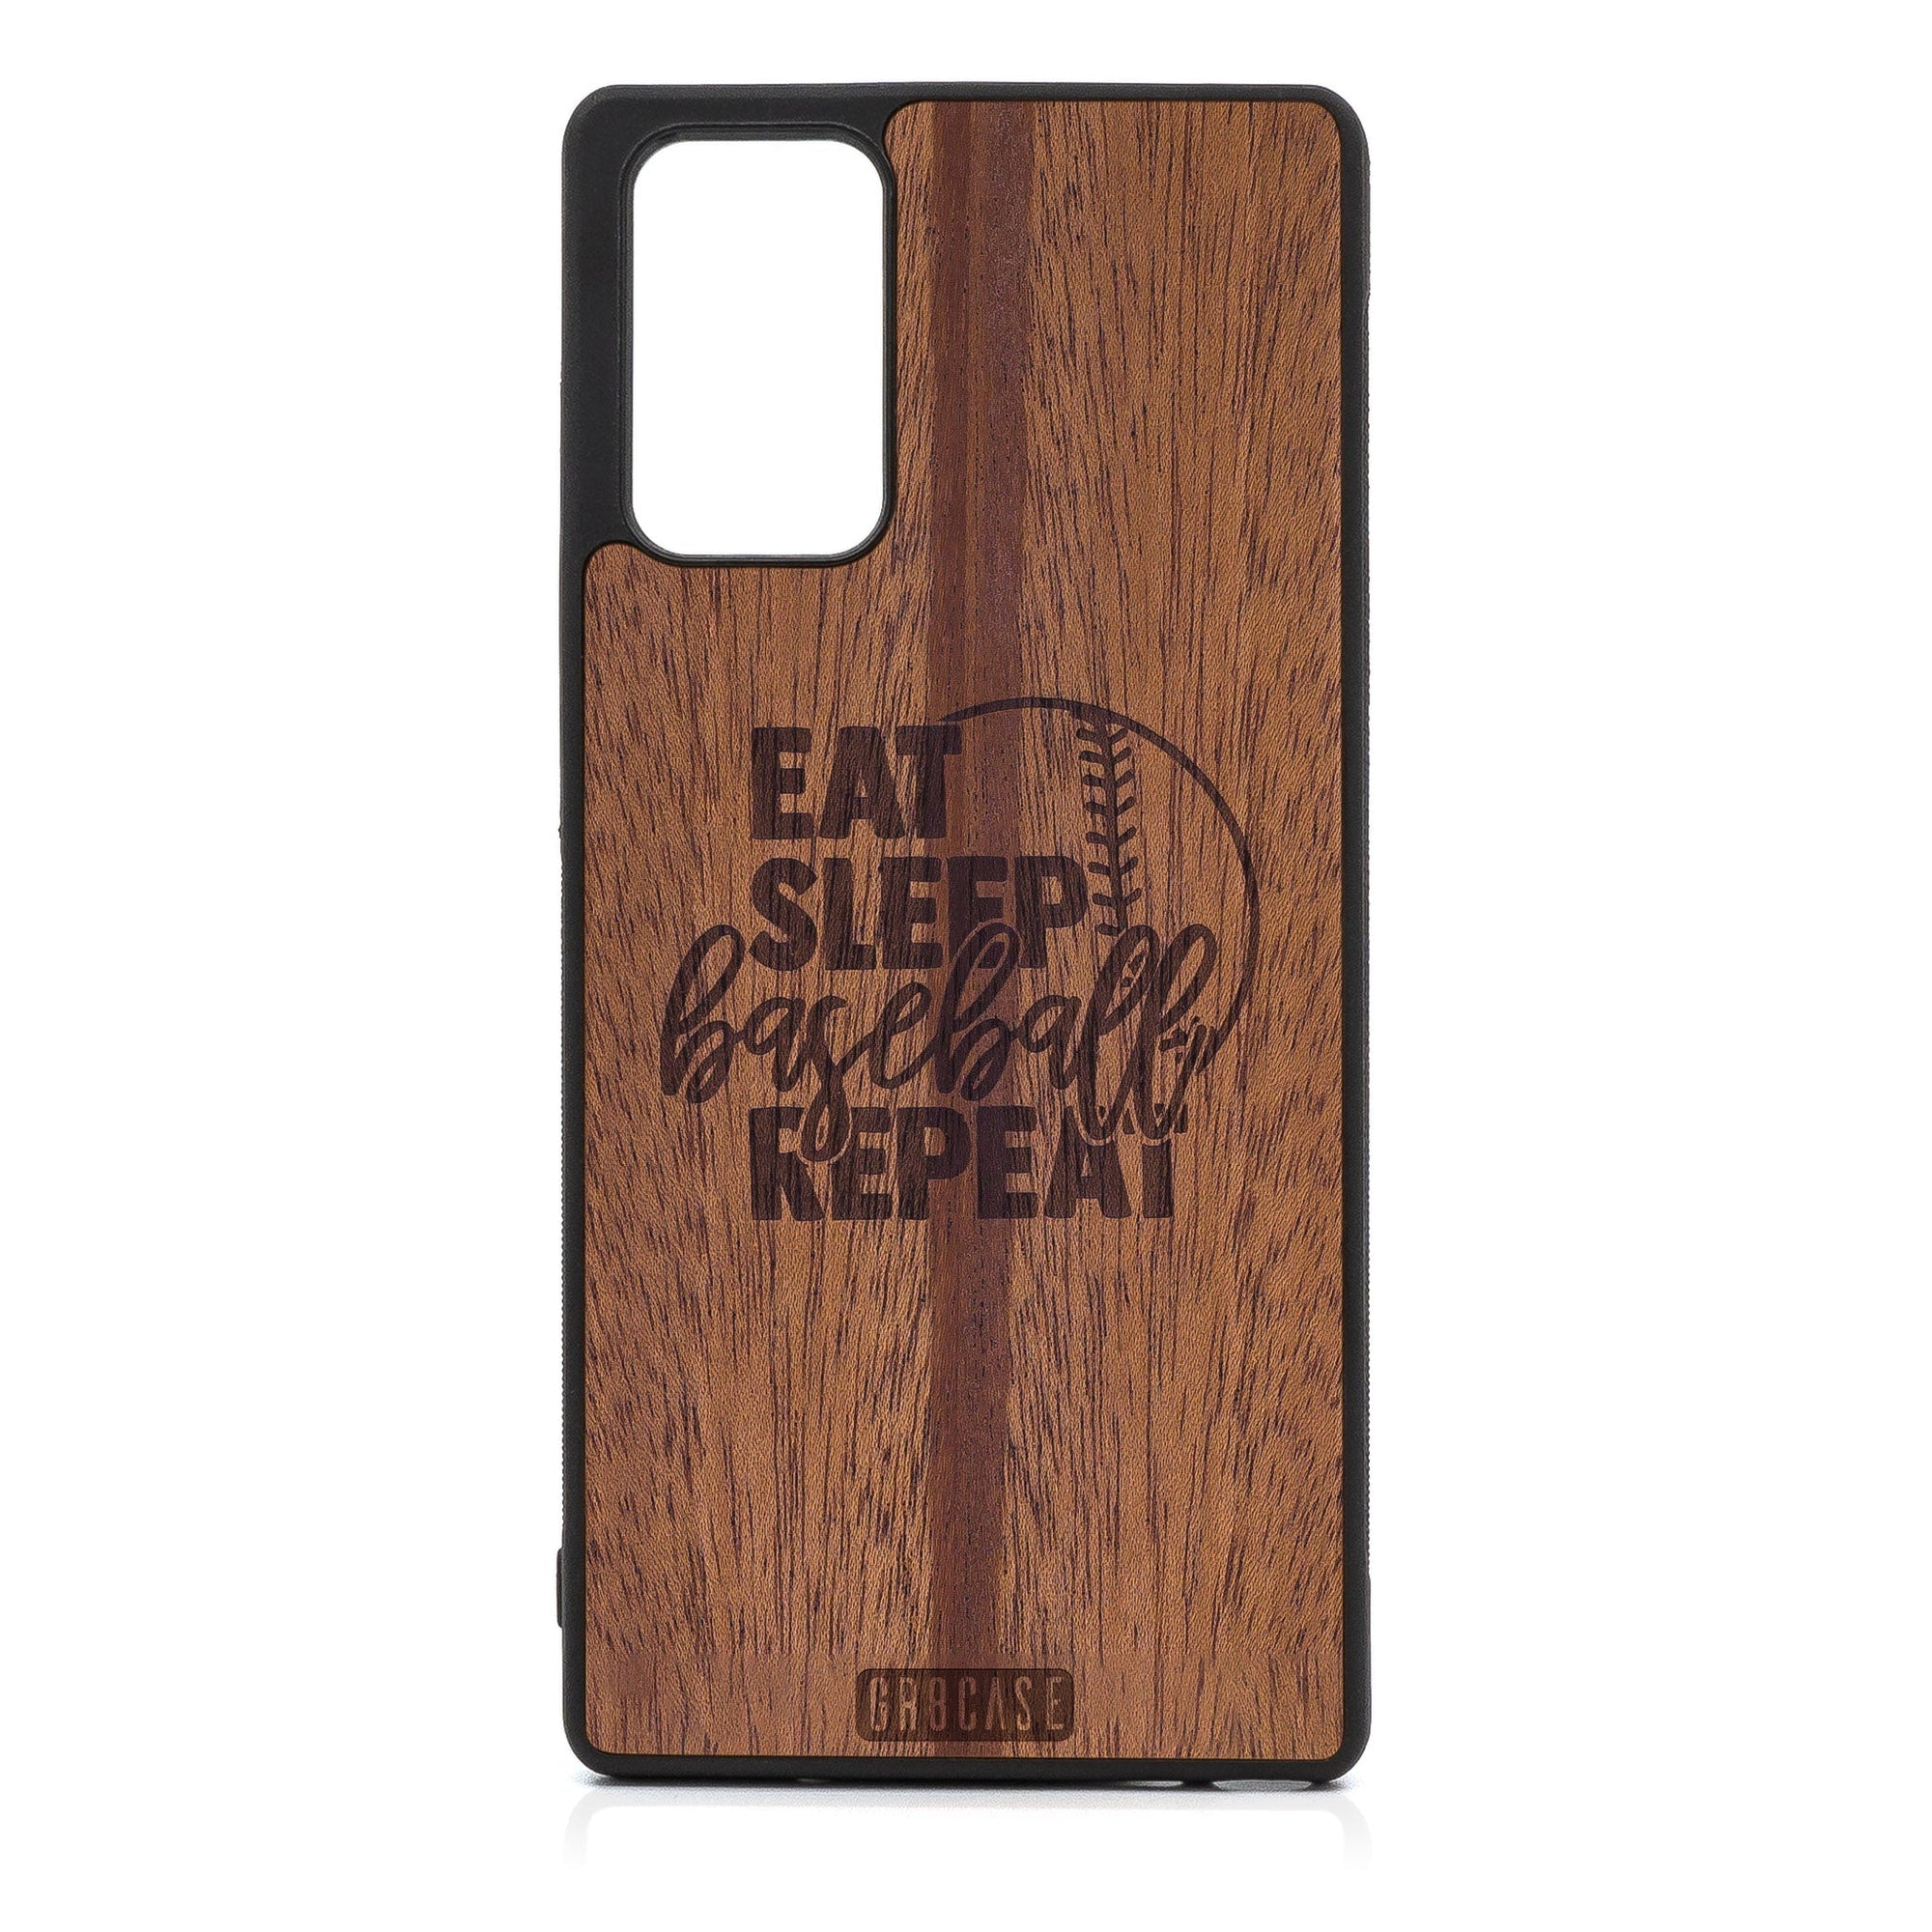 Eat Sleep Baseball Repeat Design Wood Case For Samsung Galaxy A72 5G